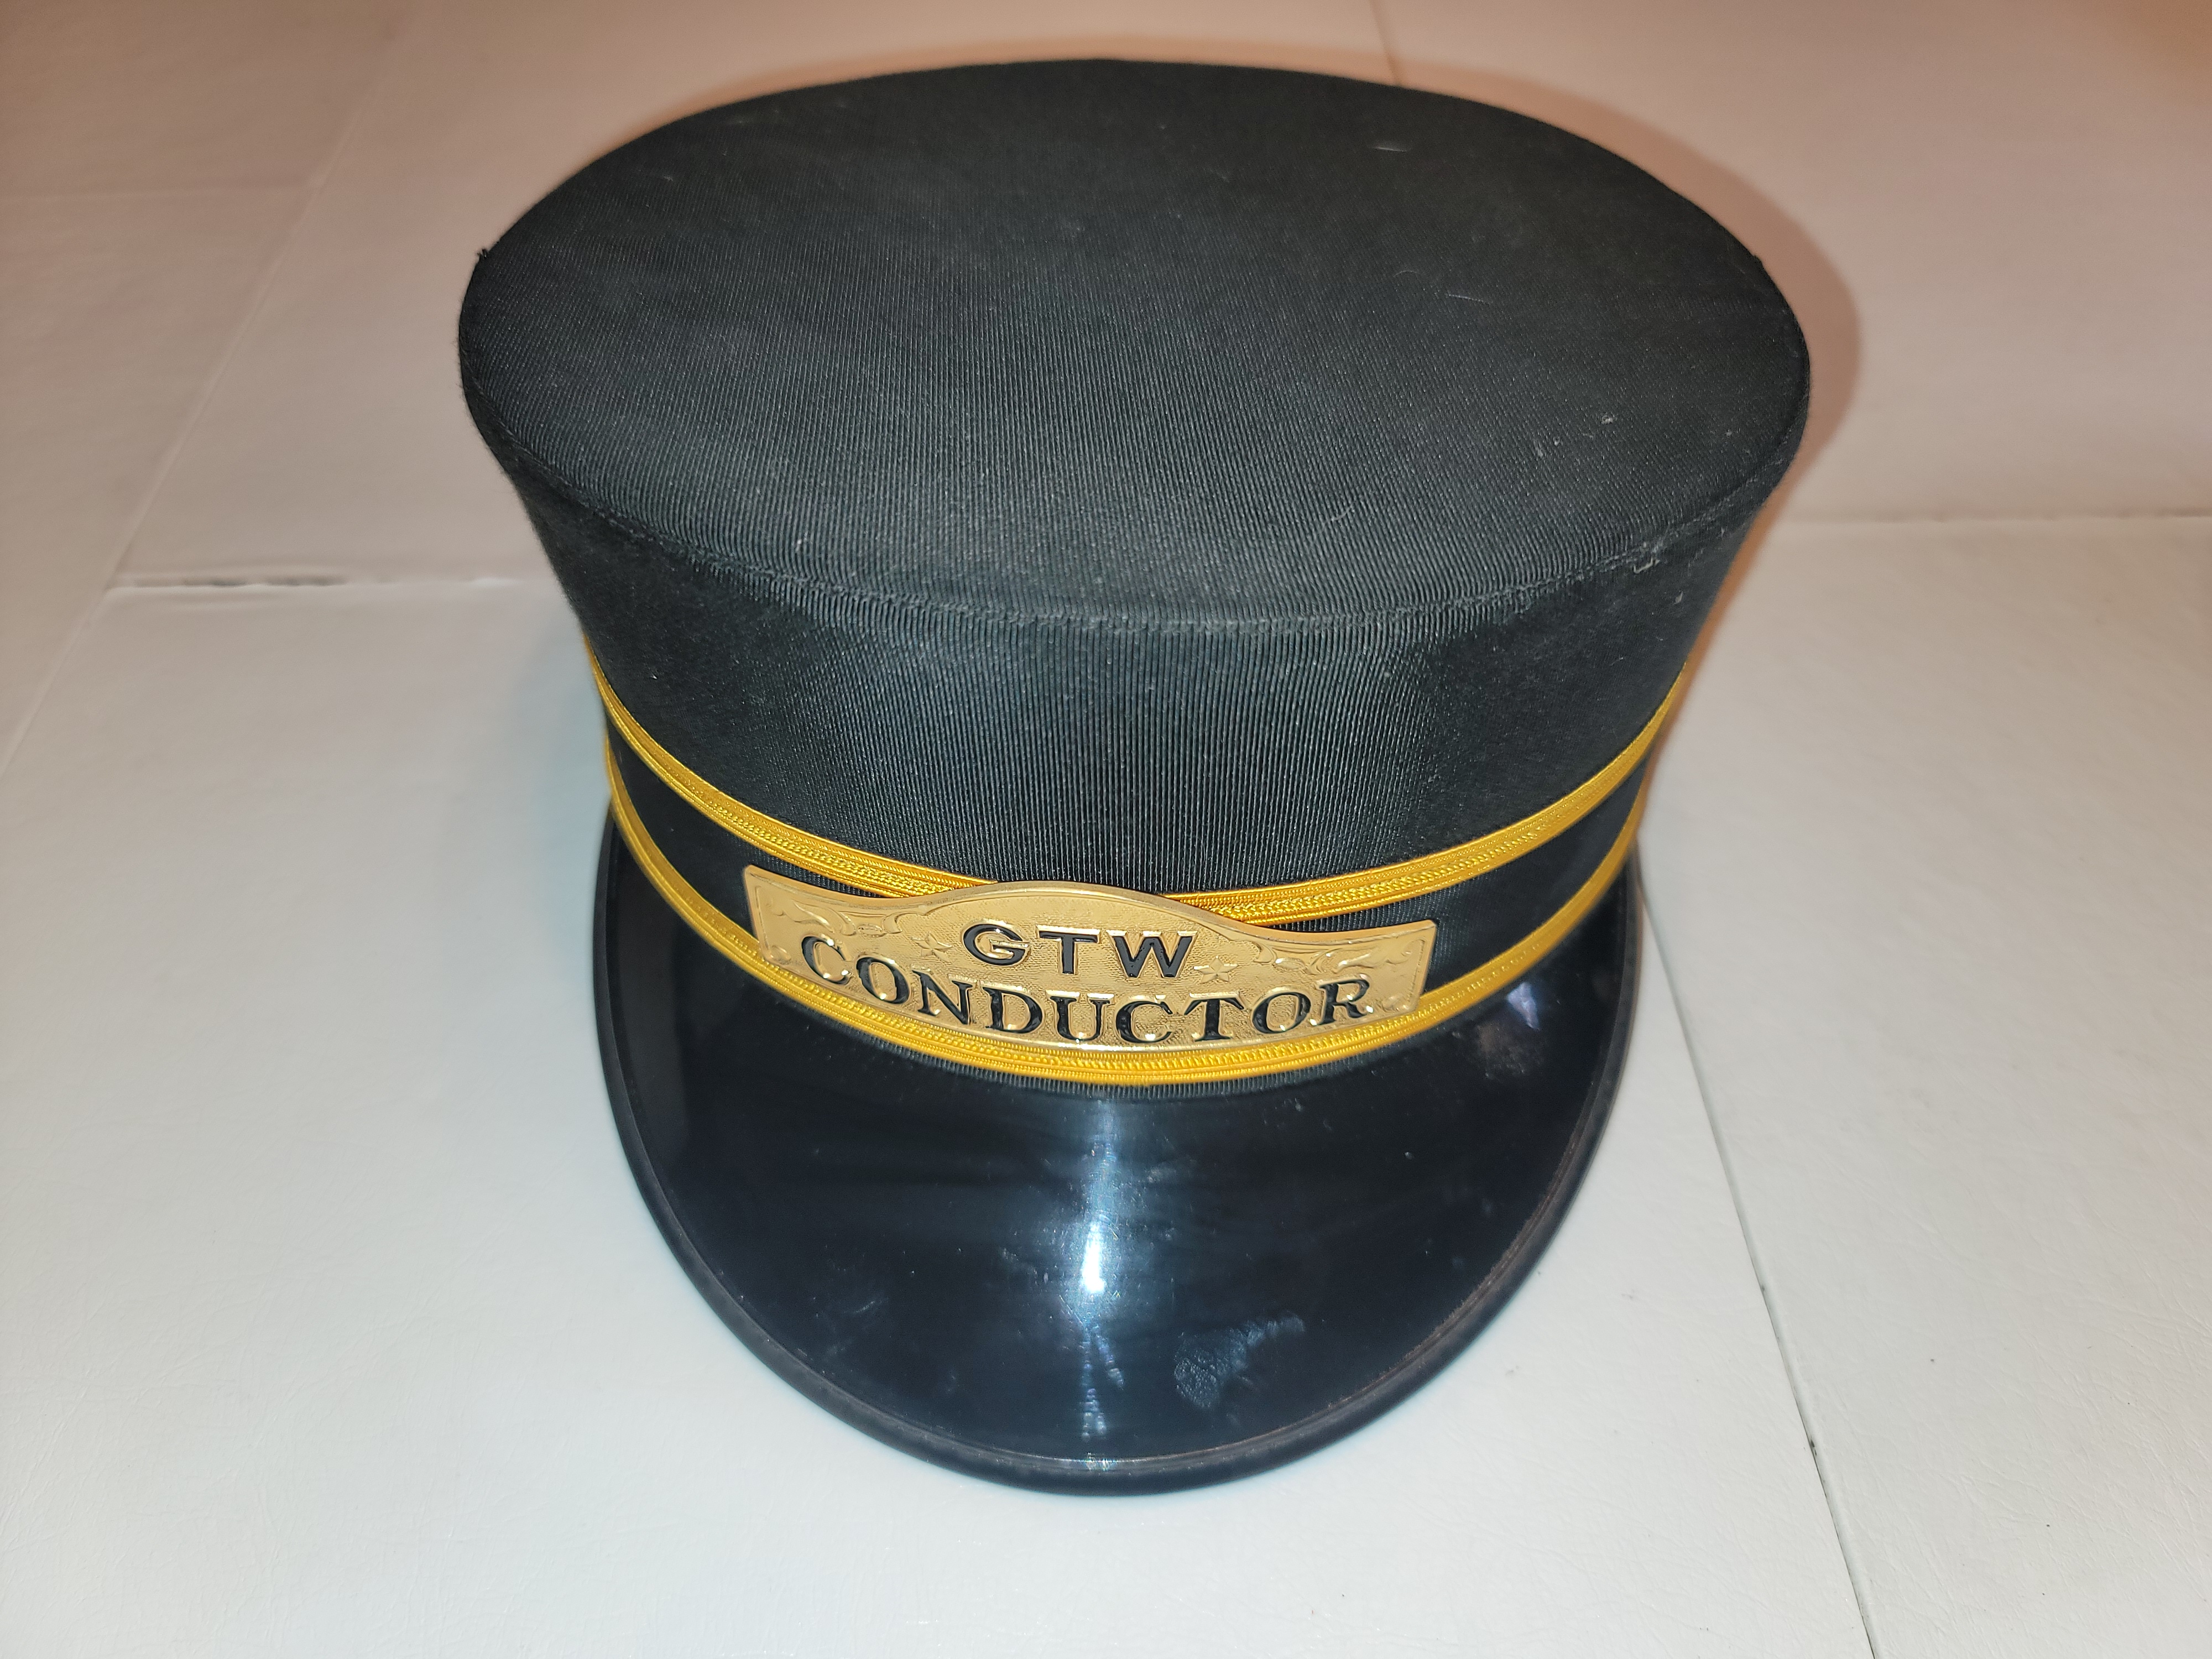 Vintage conductor's cap for passenger railway service.